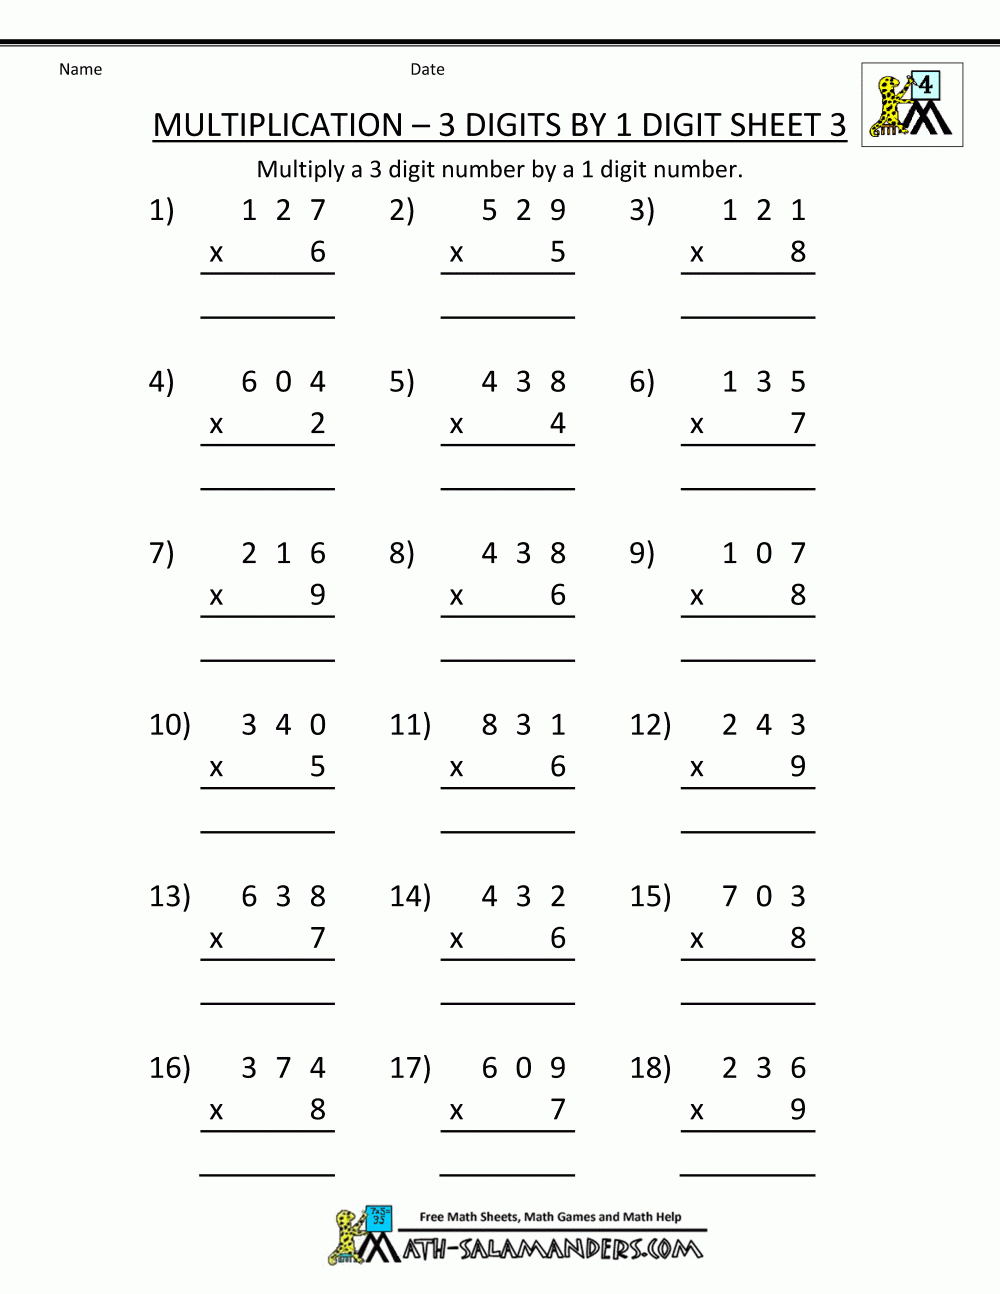 Free Math Sheets Multiplication 3 Digits1 Digit 3 | Math regarding Printable Multiplication Exercises